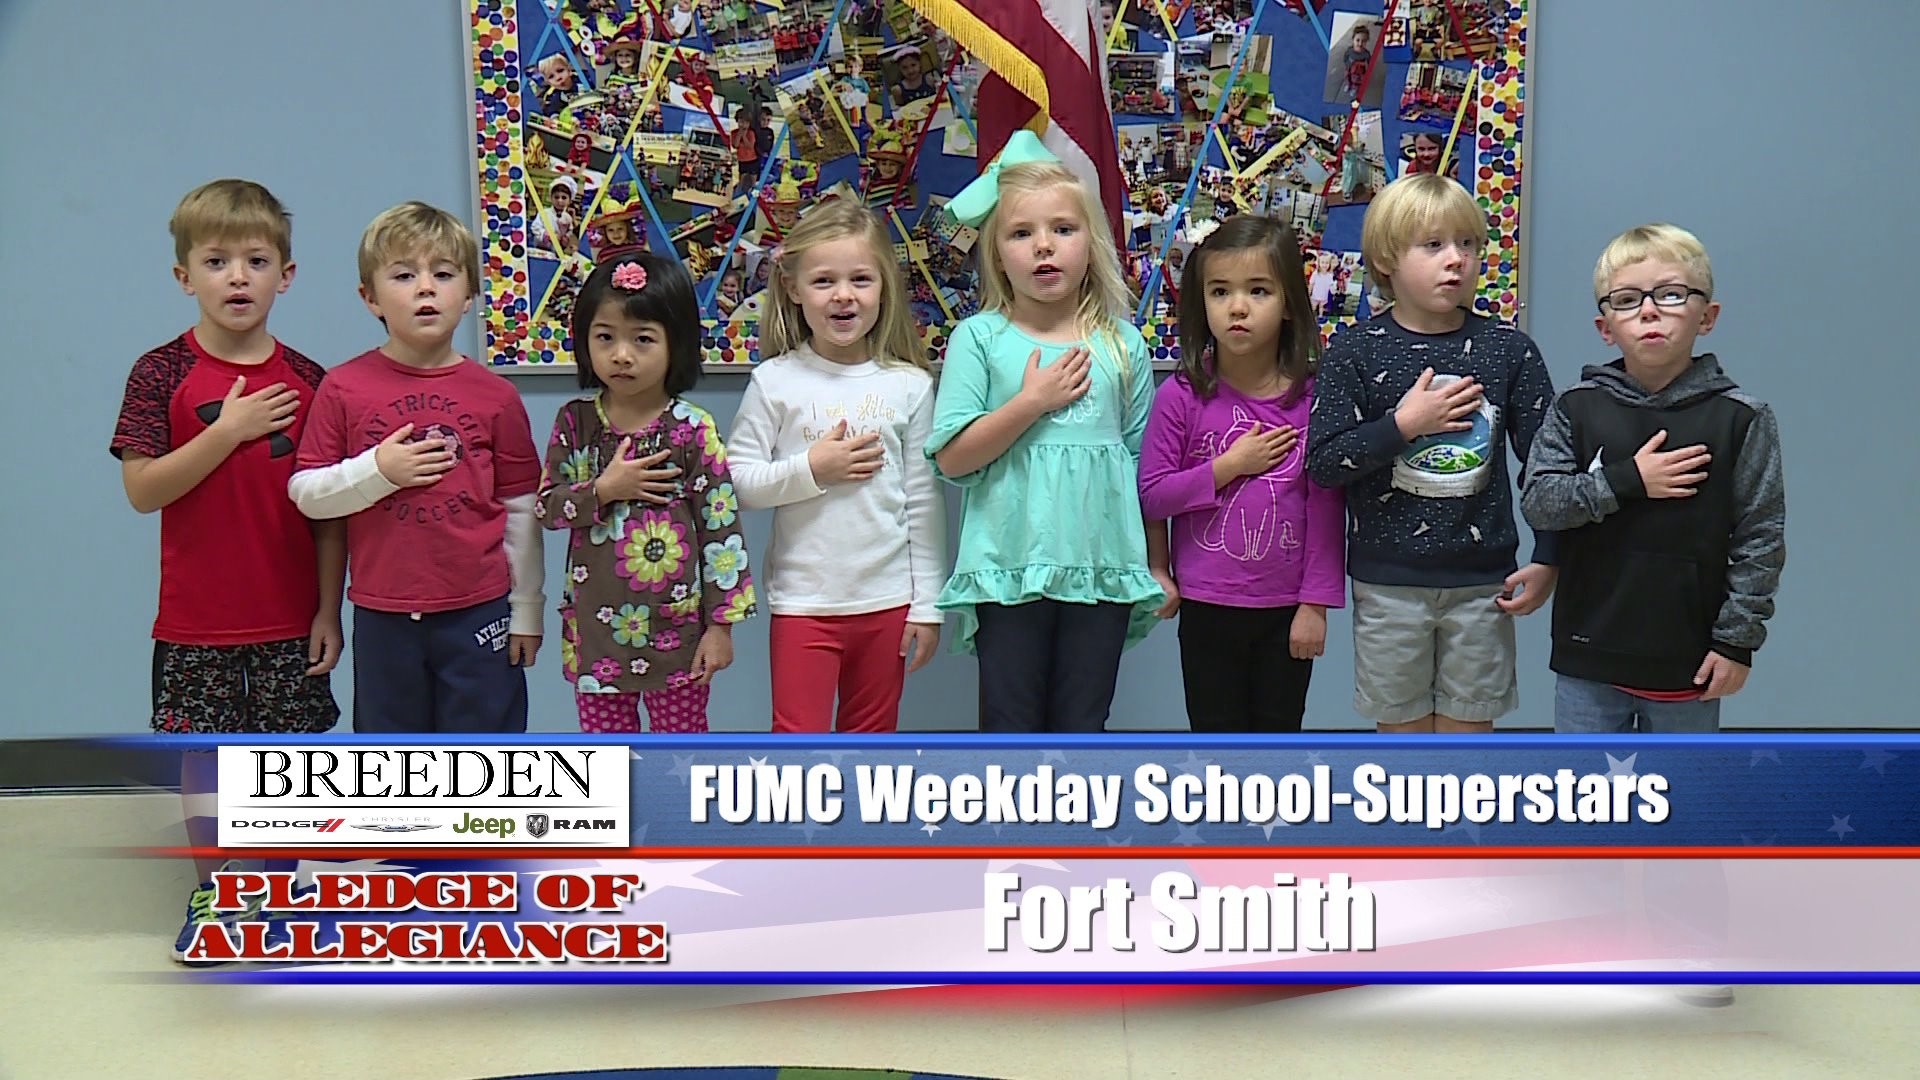 FUMC Weekday School  Superstars  Fort Smith